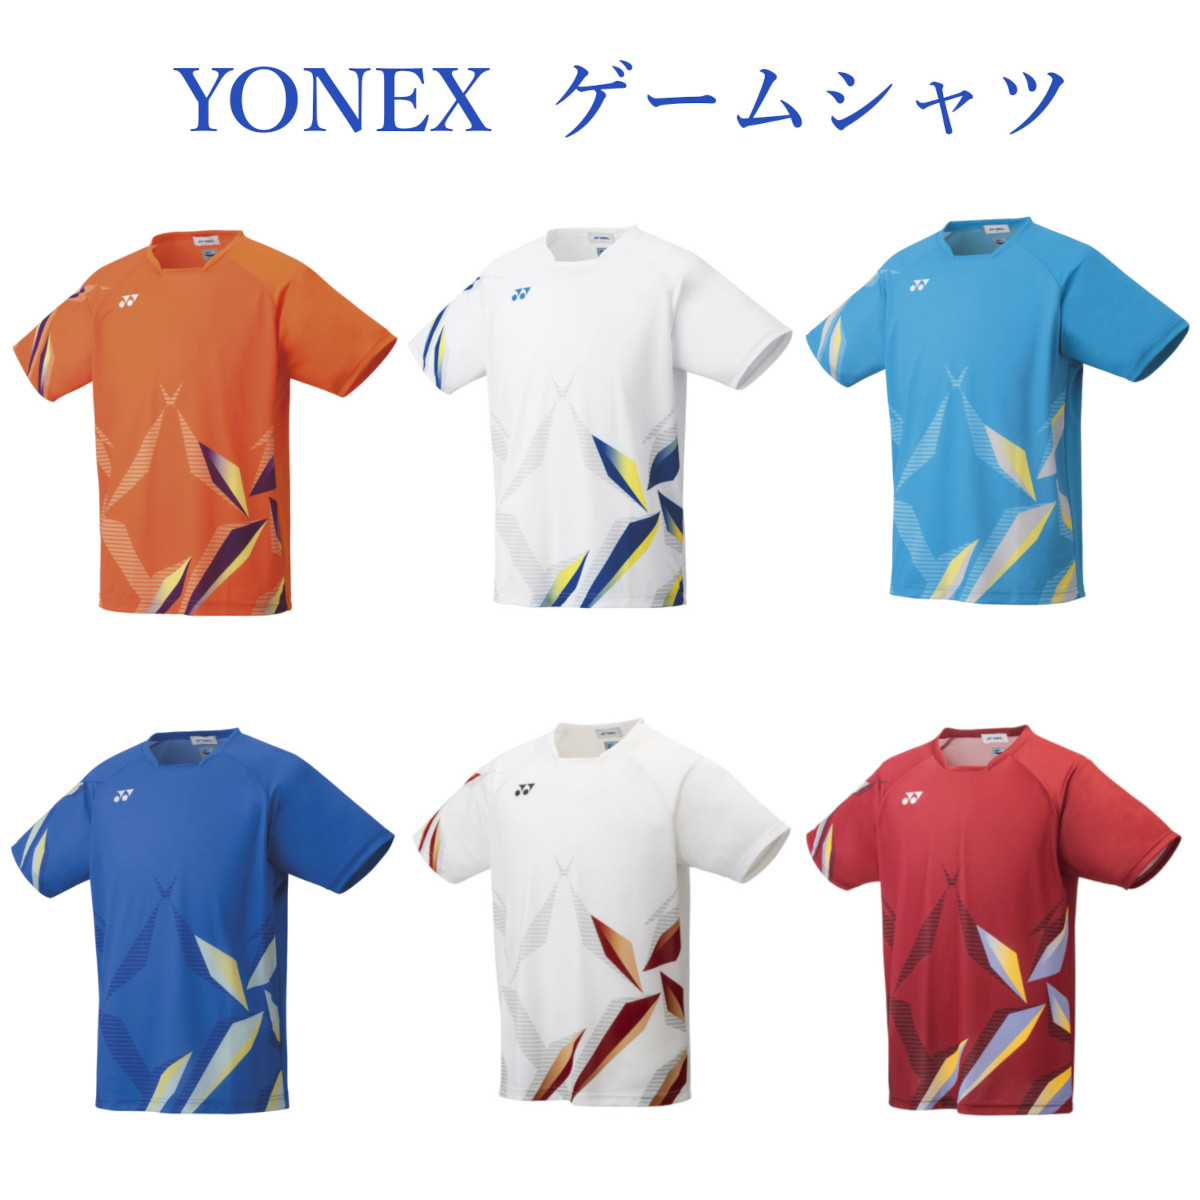 YONEX 男性用 ユニフォーム ヨネックス ゲームシャツ フィットスタイル 10407 セットアップ メンズ ソフトテニス ゆうパケット 2021SS 対応 安値 テニス バドミントン メール便